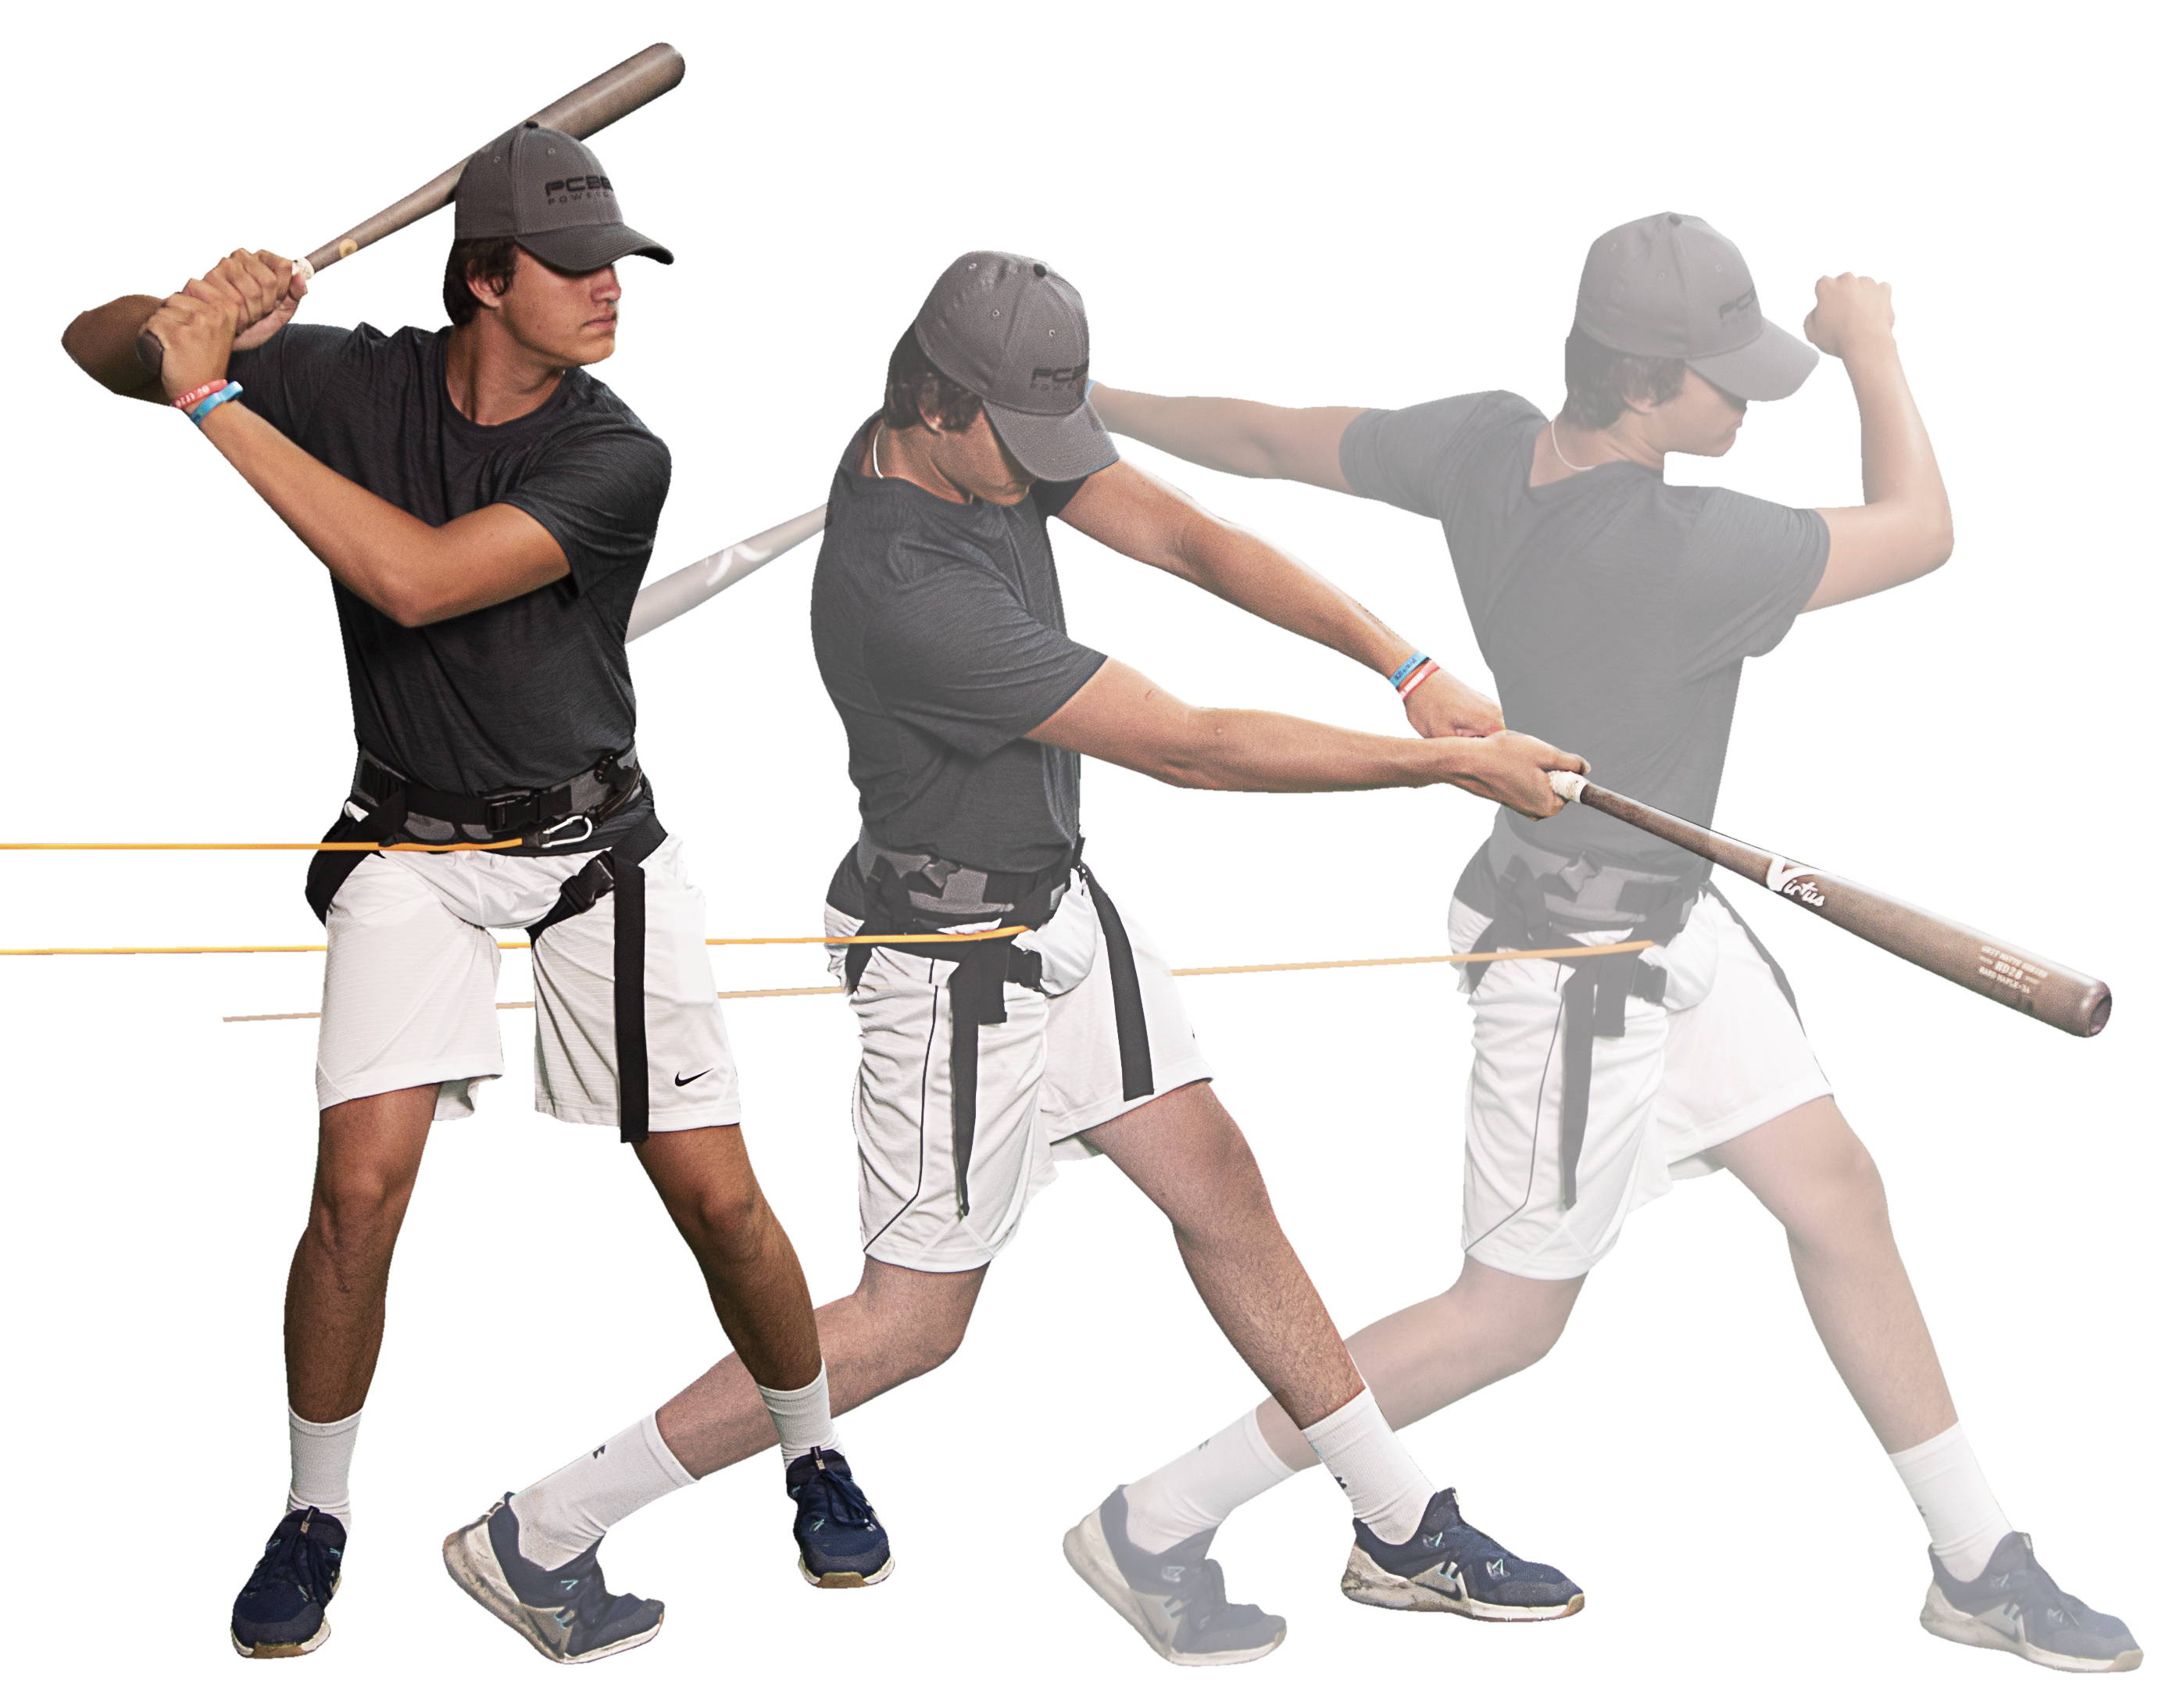 Increase Pitching Velocity and Bat Speed Powercore 360 Baseball Training Equipment Full Body Training System Hip & Arm Training System Core Resistance Band for Softball or Baseball 